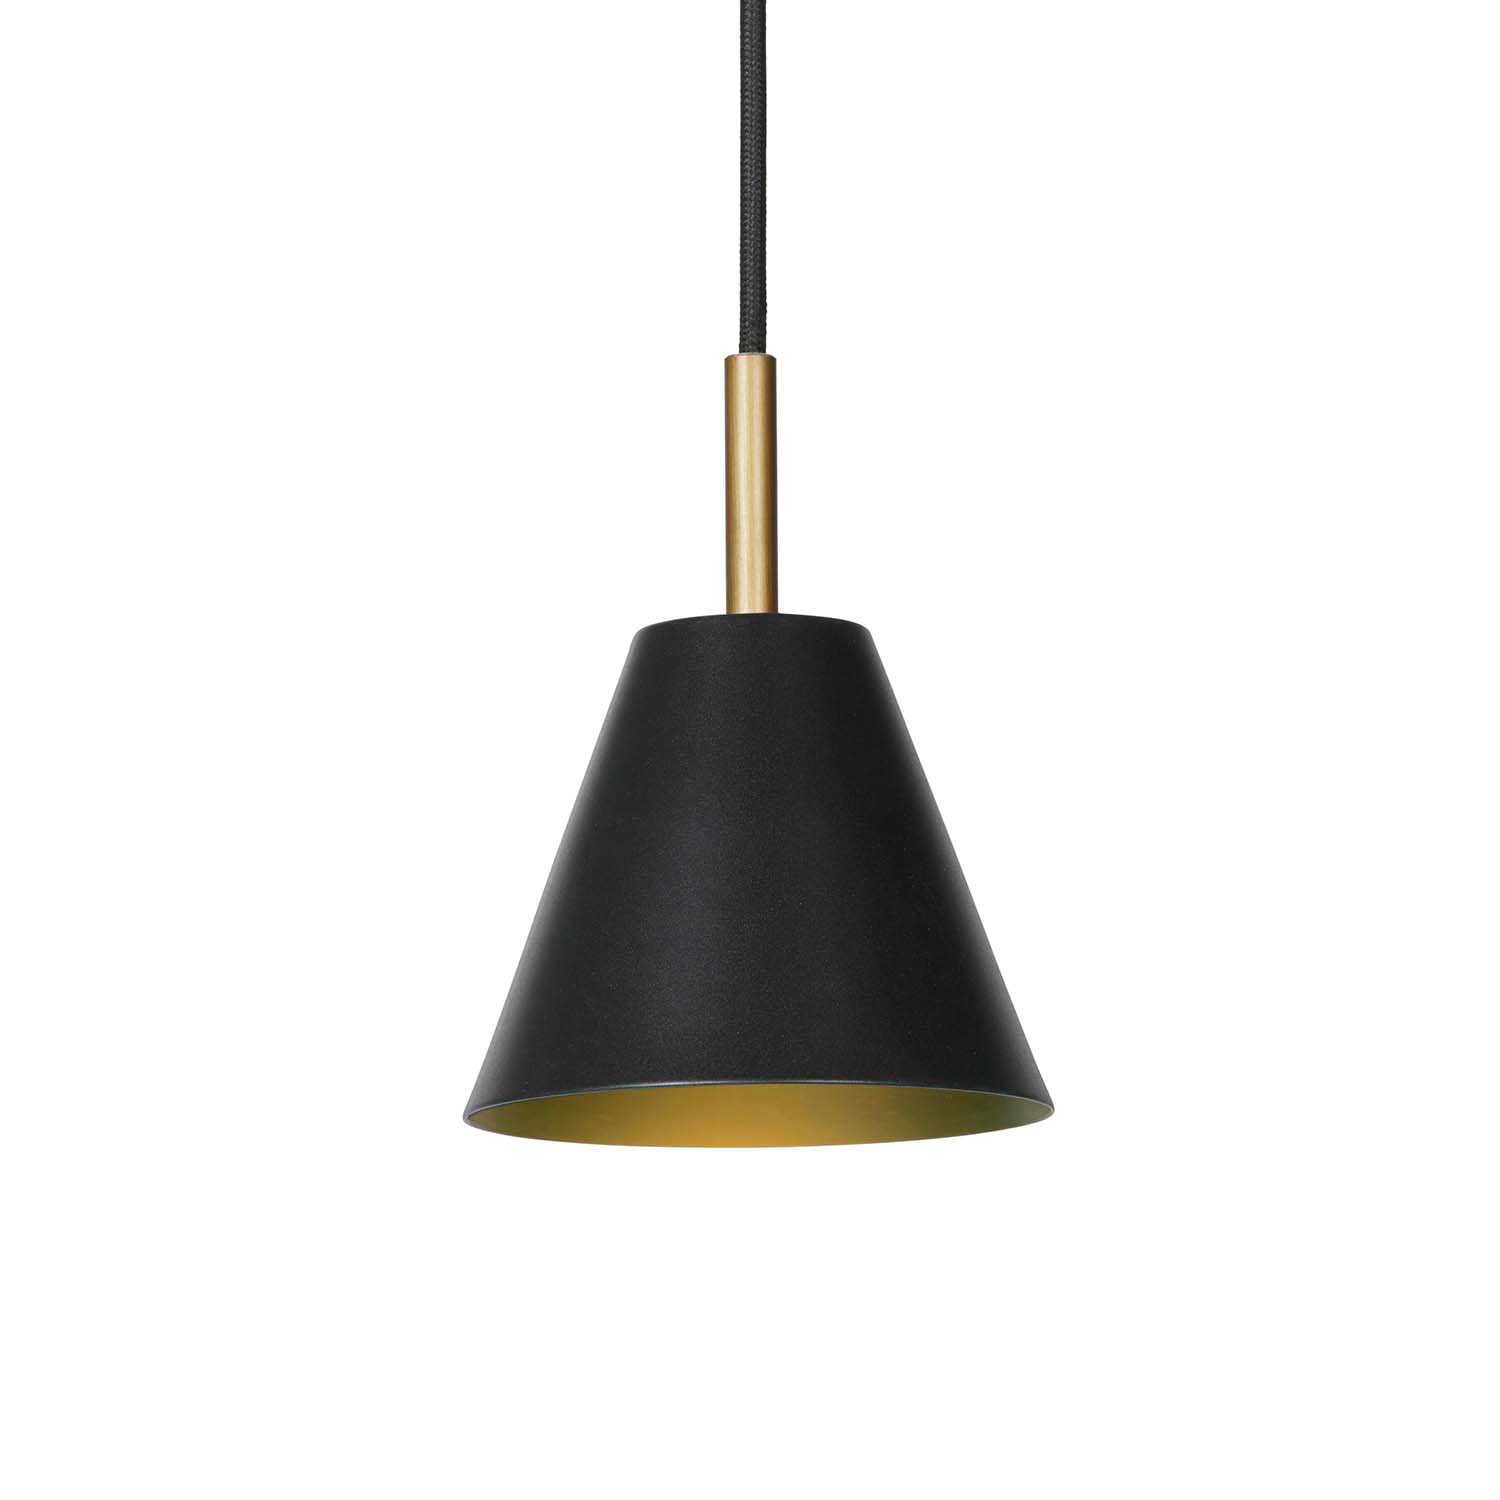 HYGGE - Vintage conical design metal pendant light